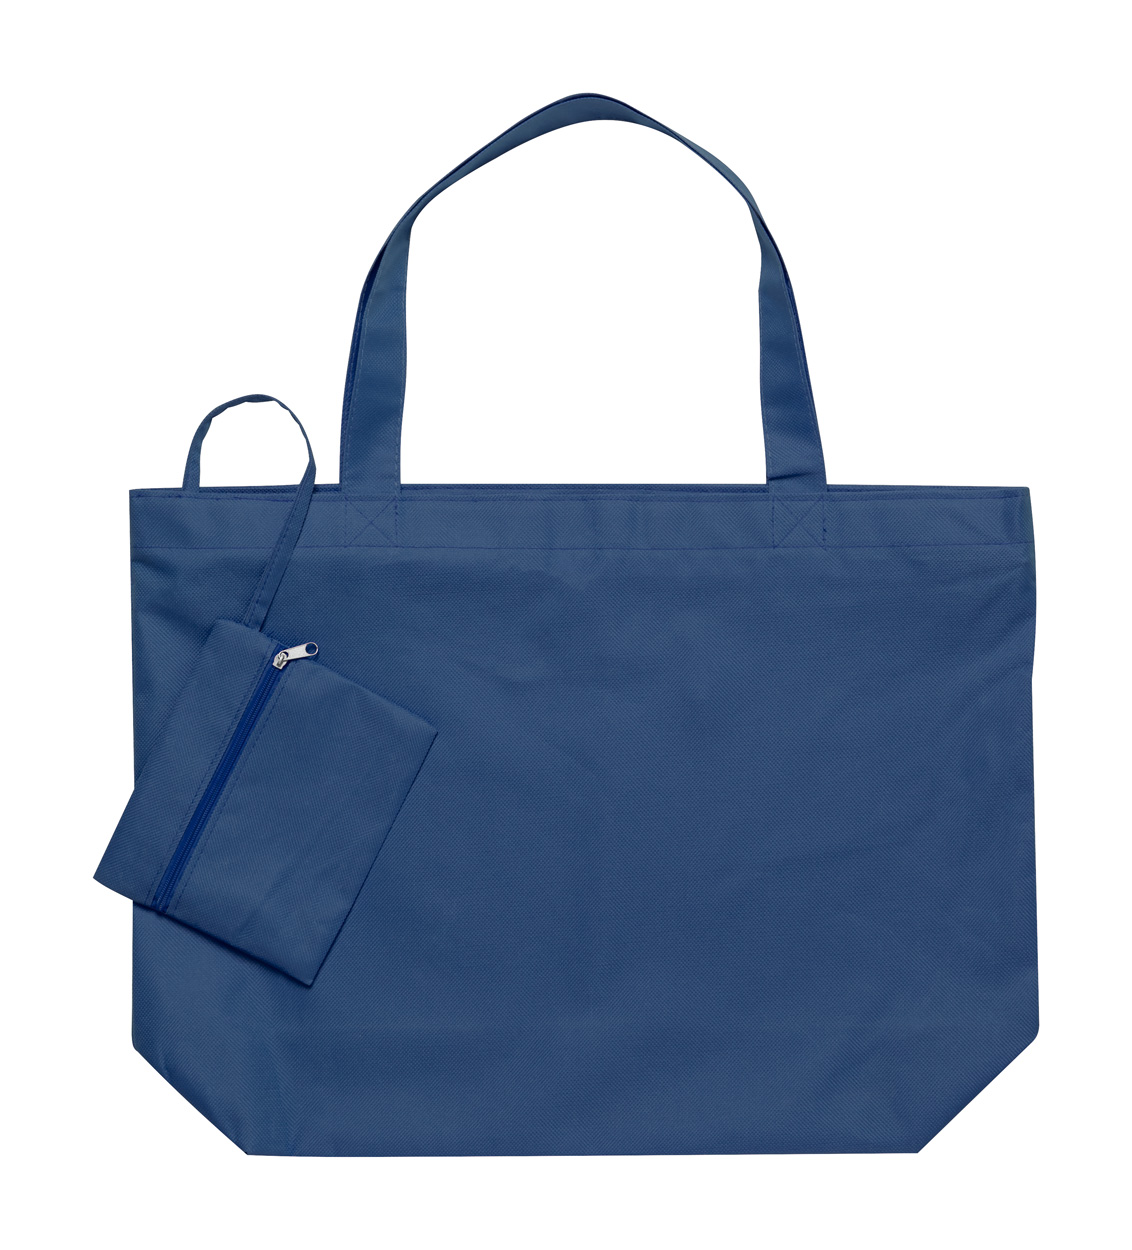 Revile beach bag - blue